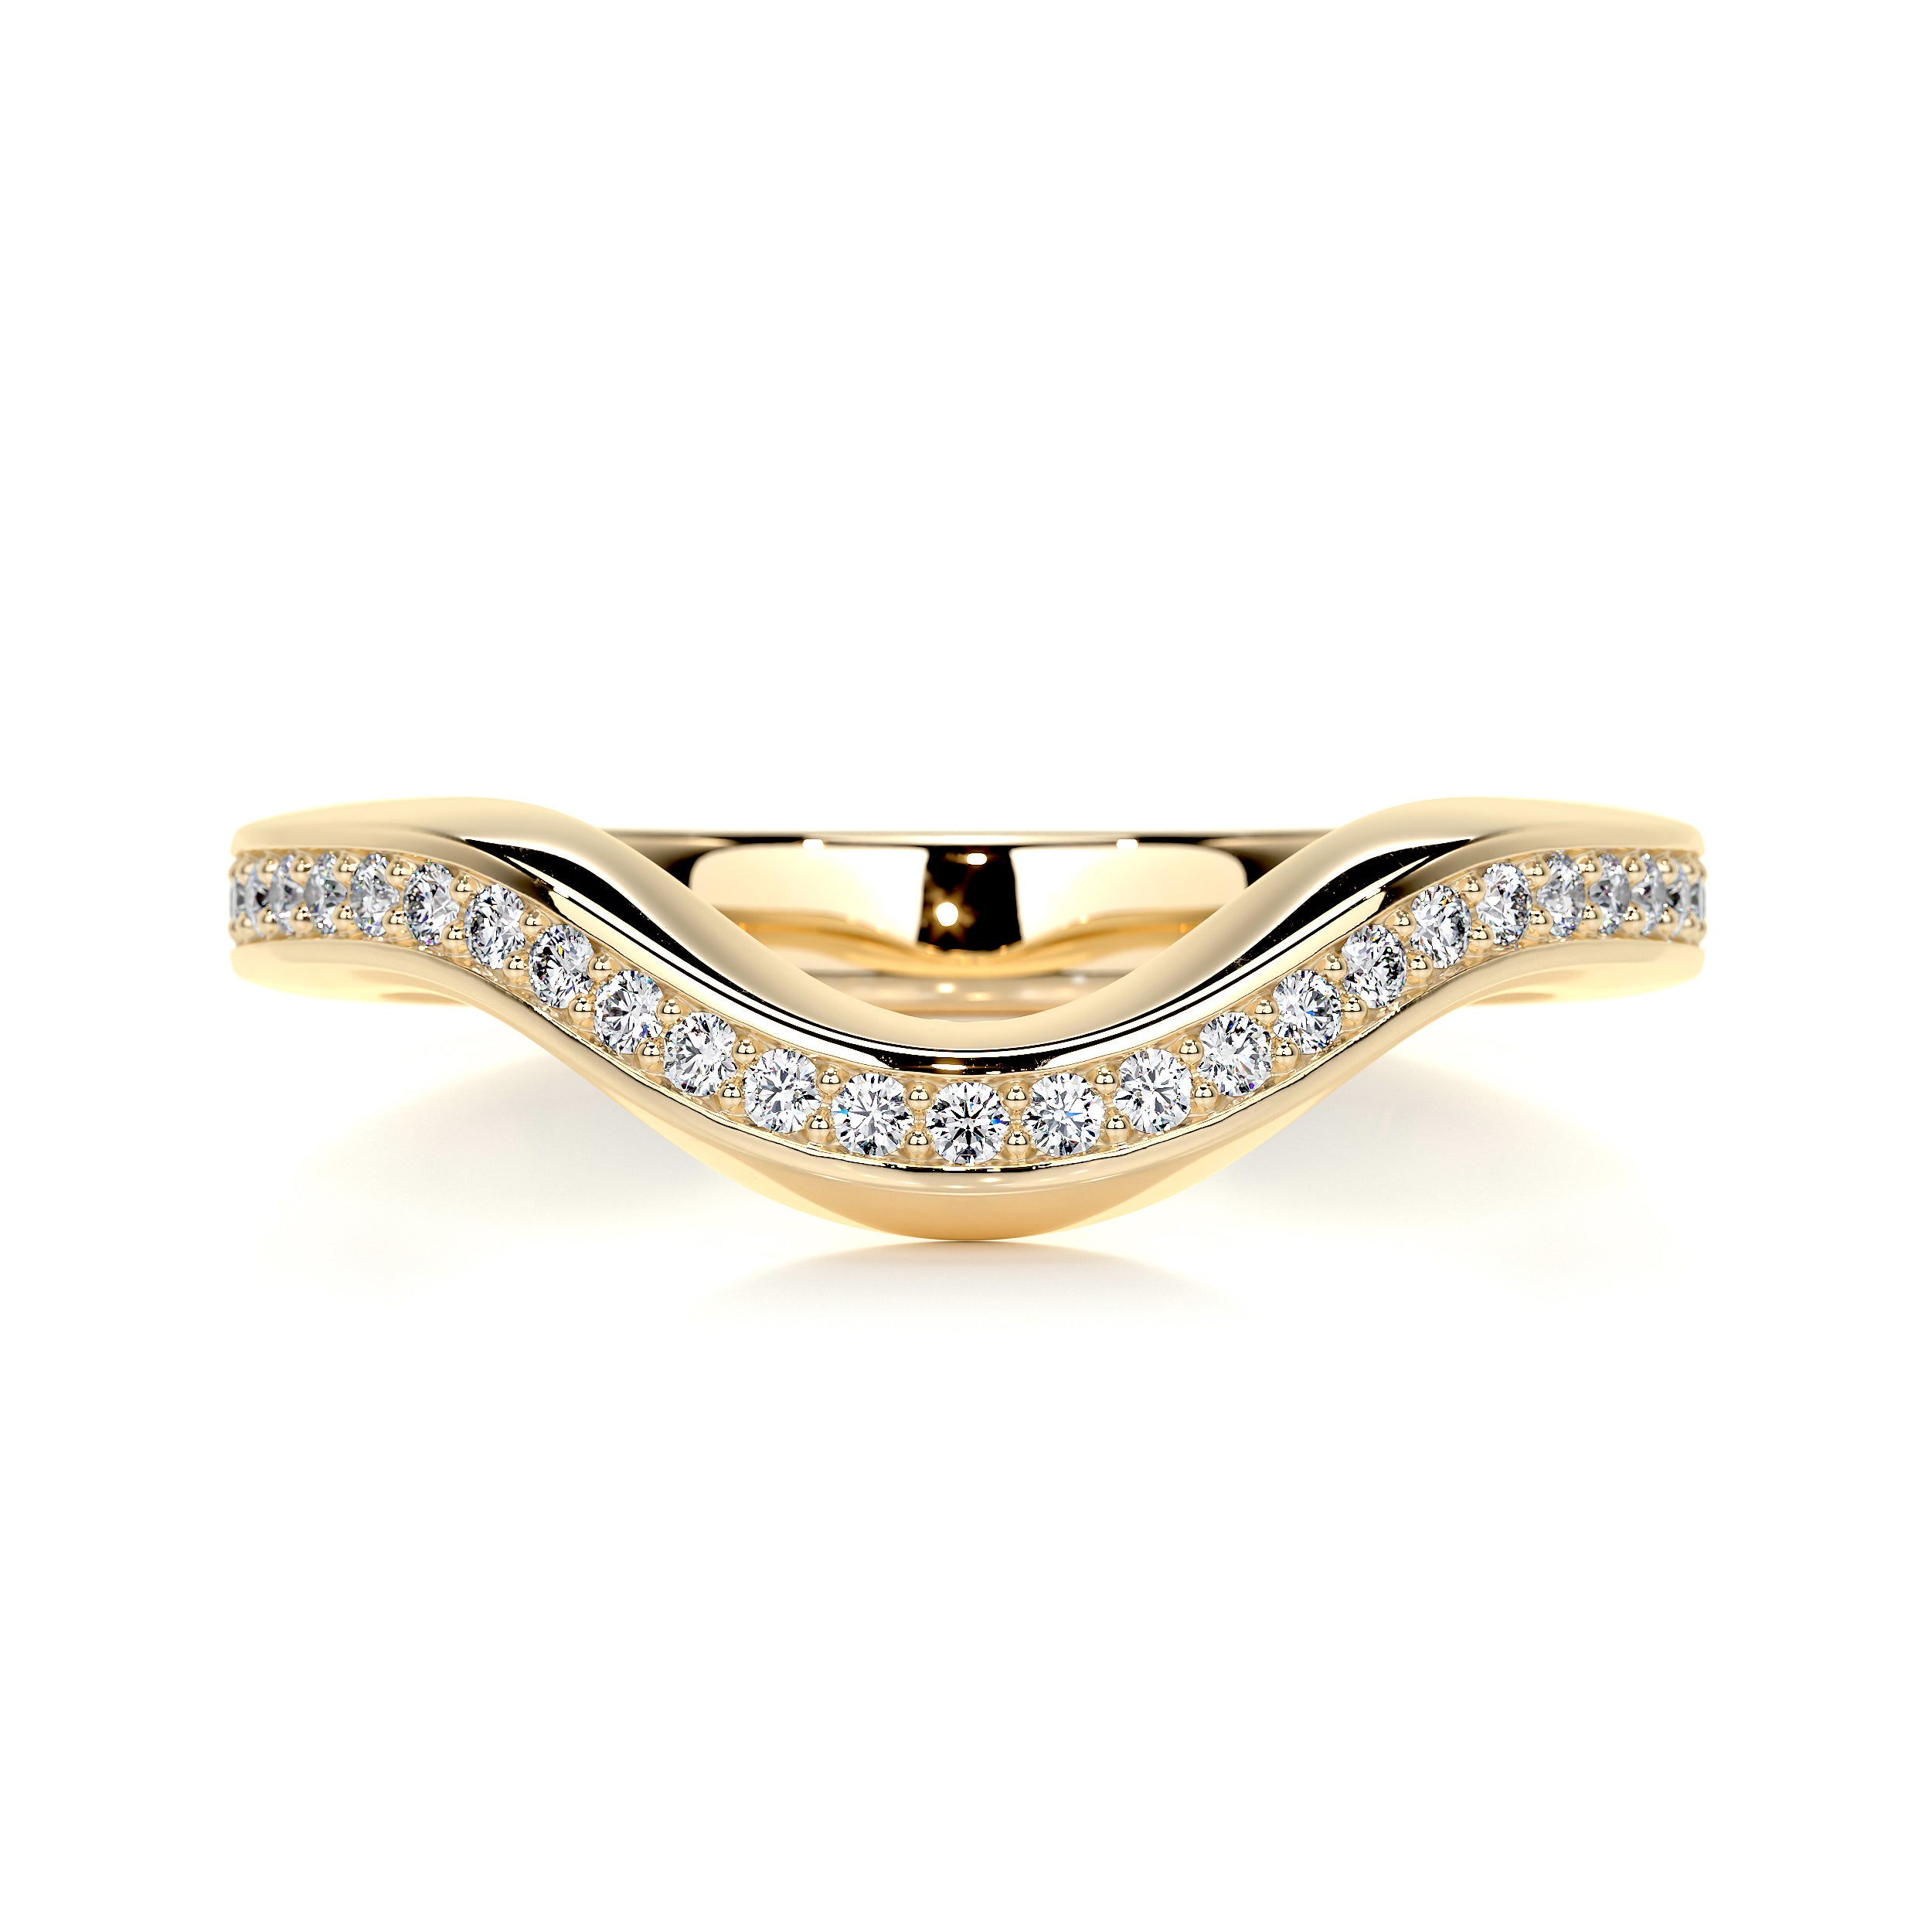 Lucy Diamond Wedding Ring   (0.30 Carat) -18K Yellow Gold